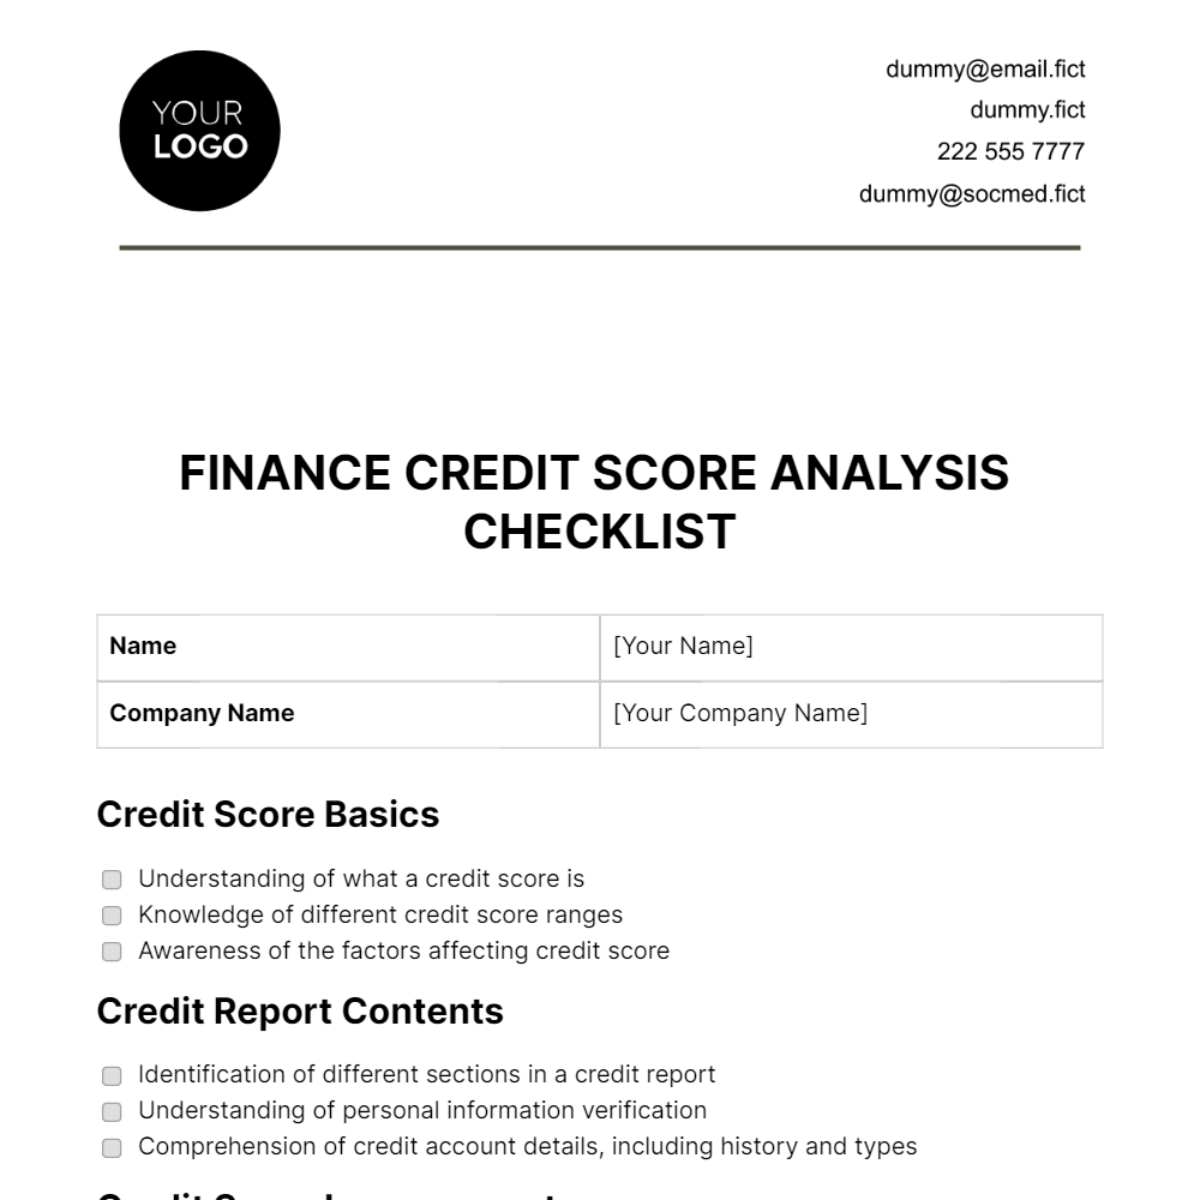 Finance Credit Score Analysis Checklist Template